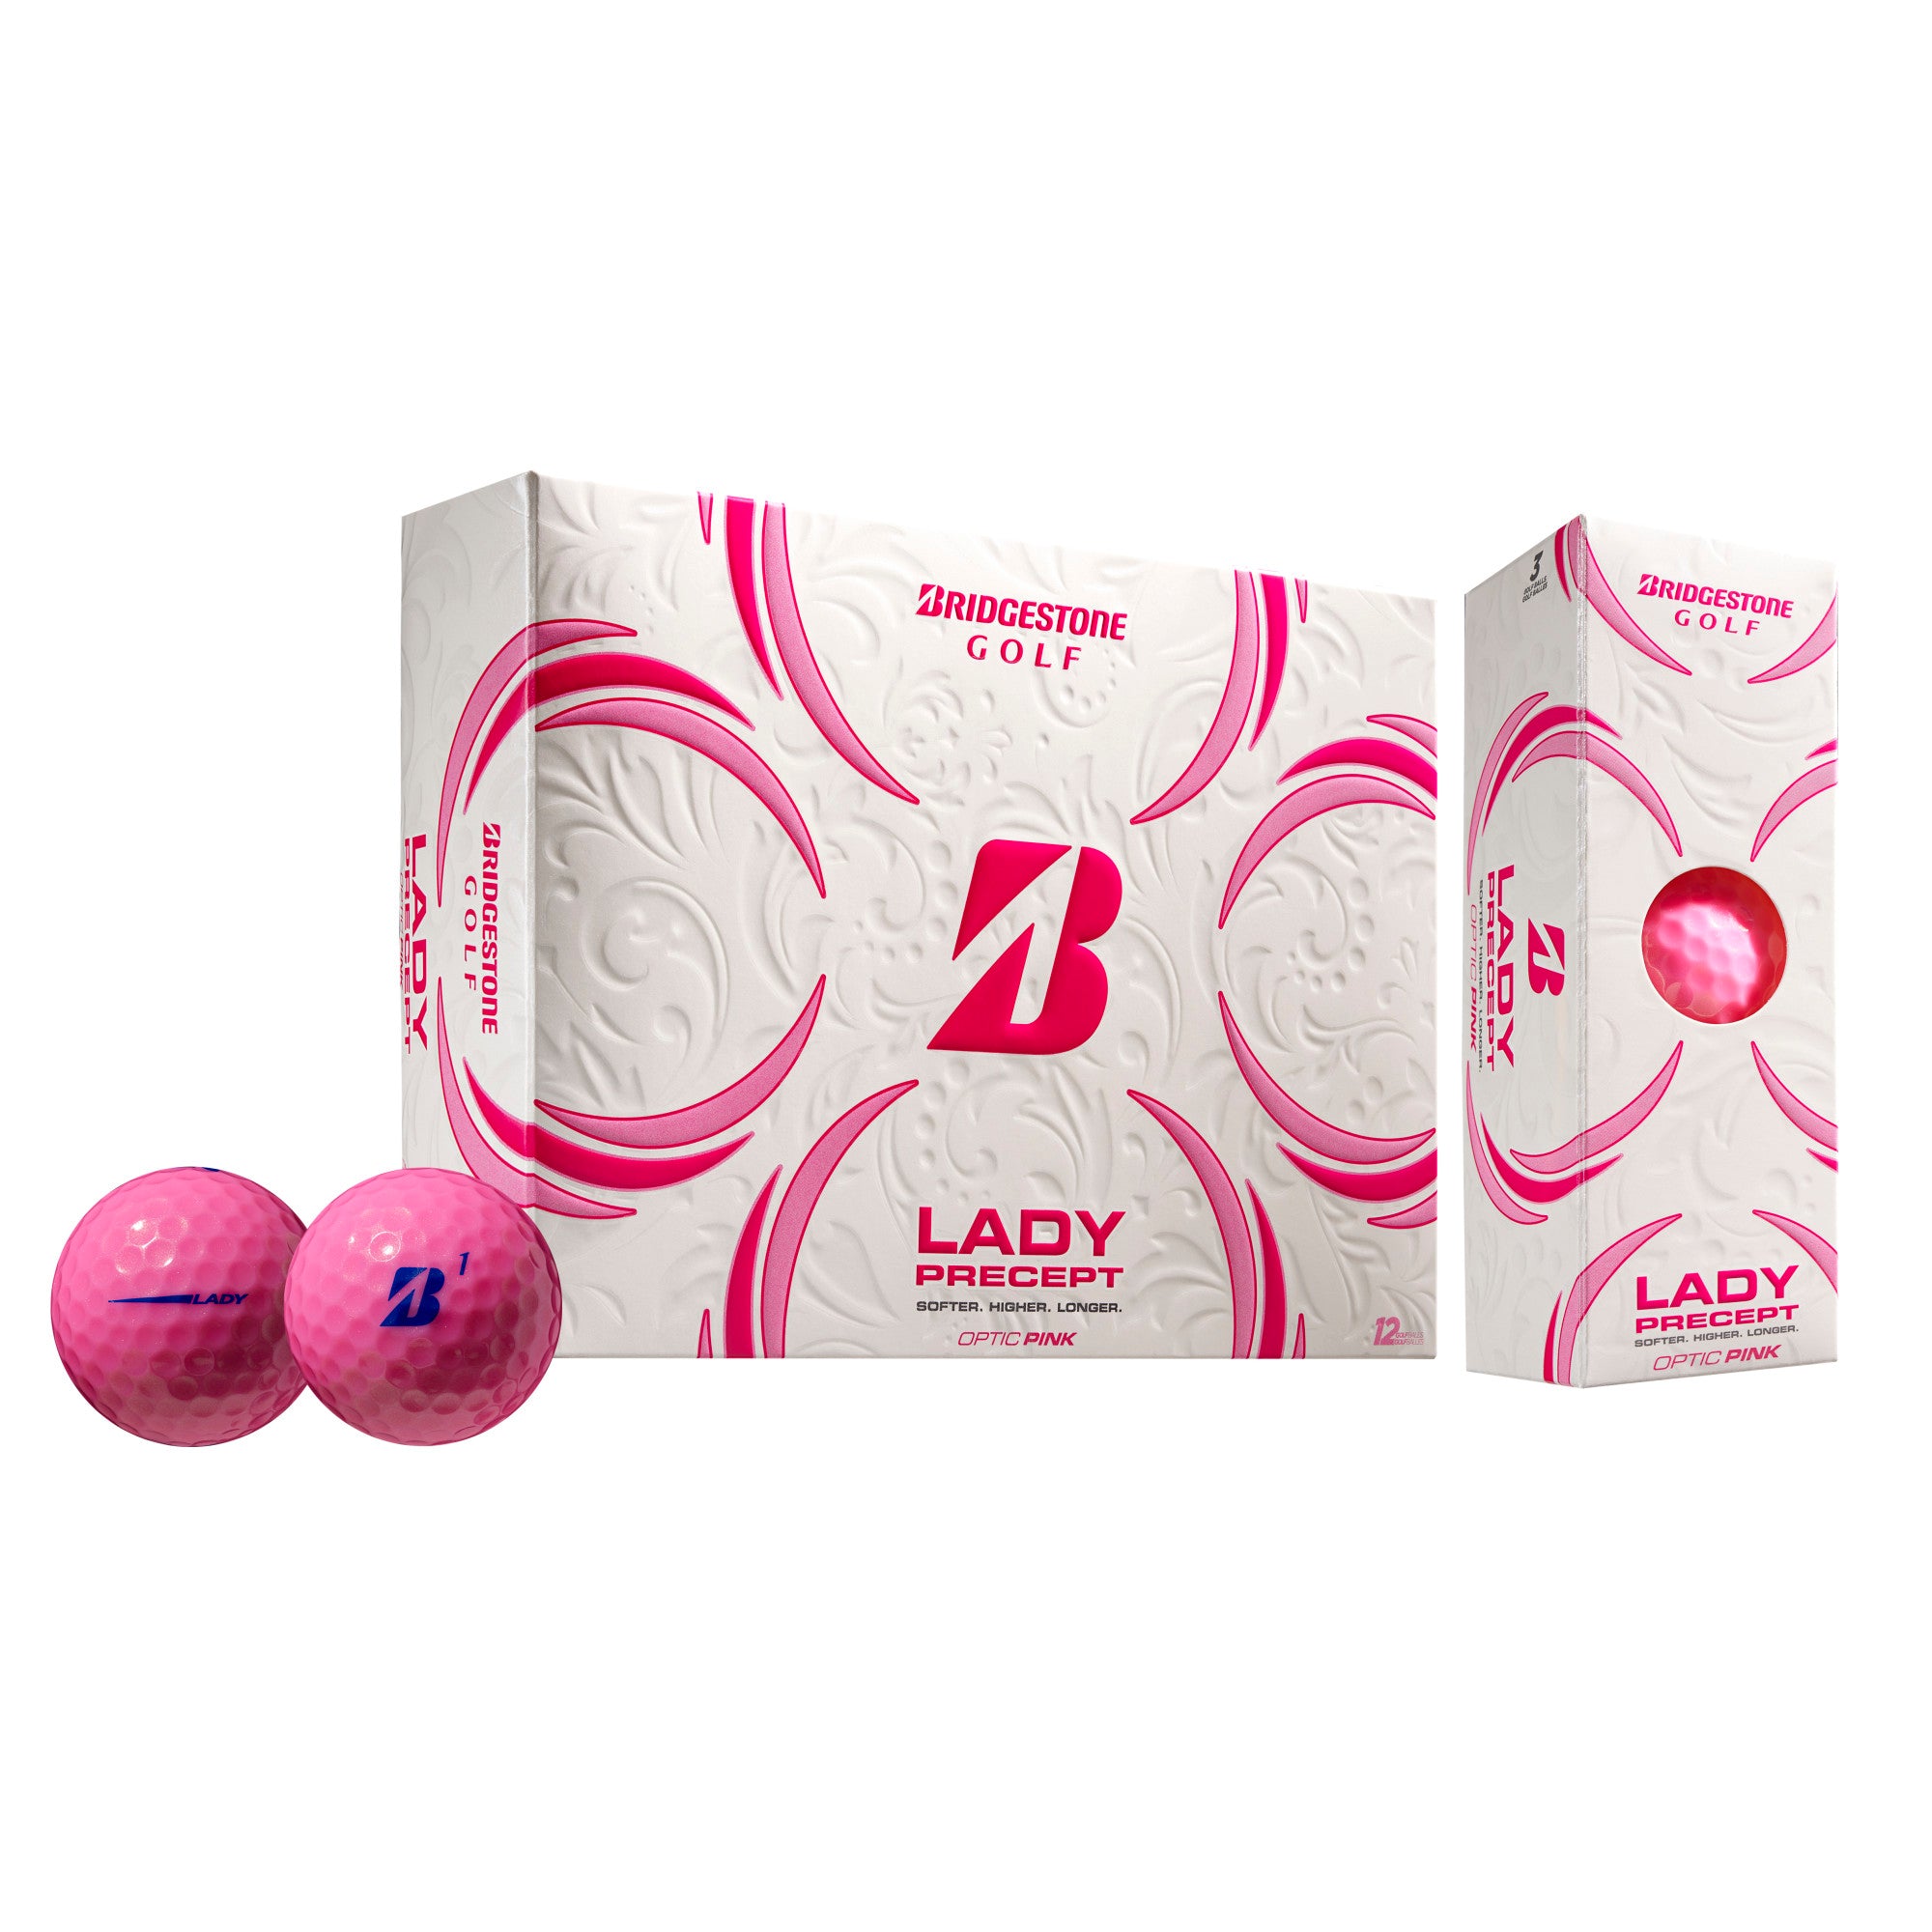 Ladies Bridgestone Golf Lady Precept Pink Dz Pink